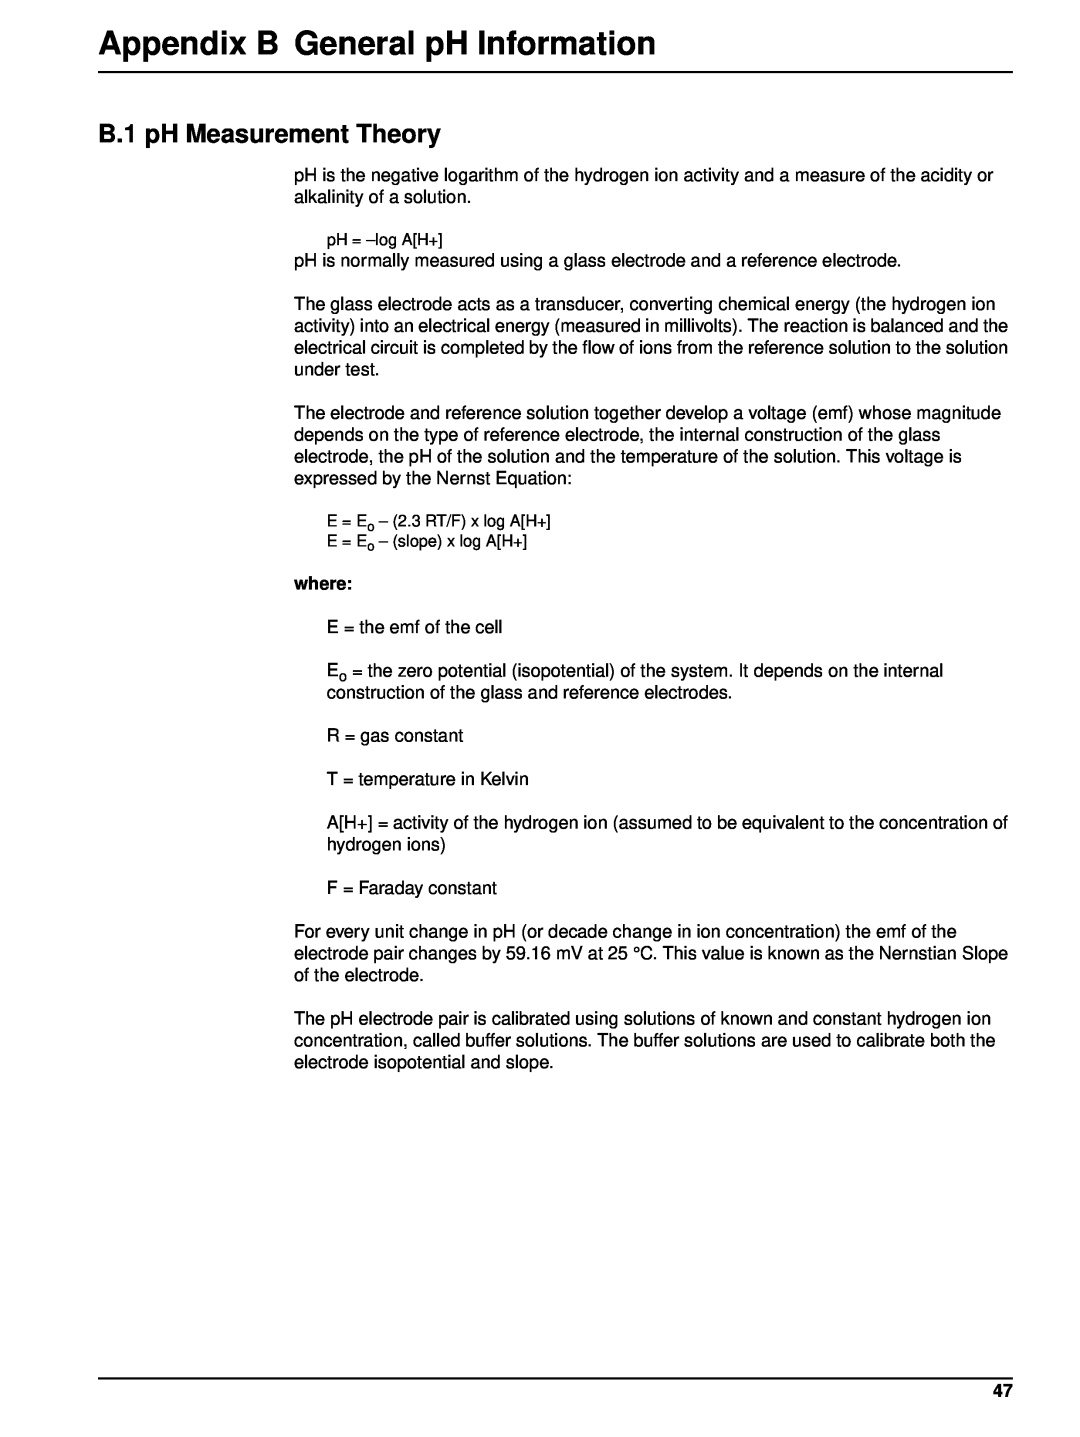 Hach 6120118 user manual Appendix B General pH Information, B.1 pH Measurement Theory, where 